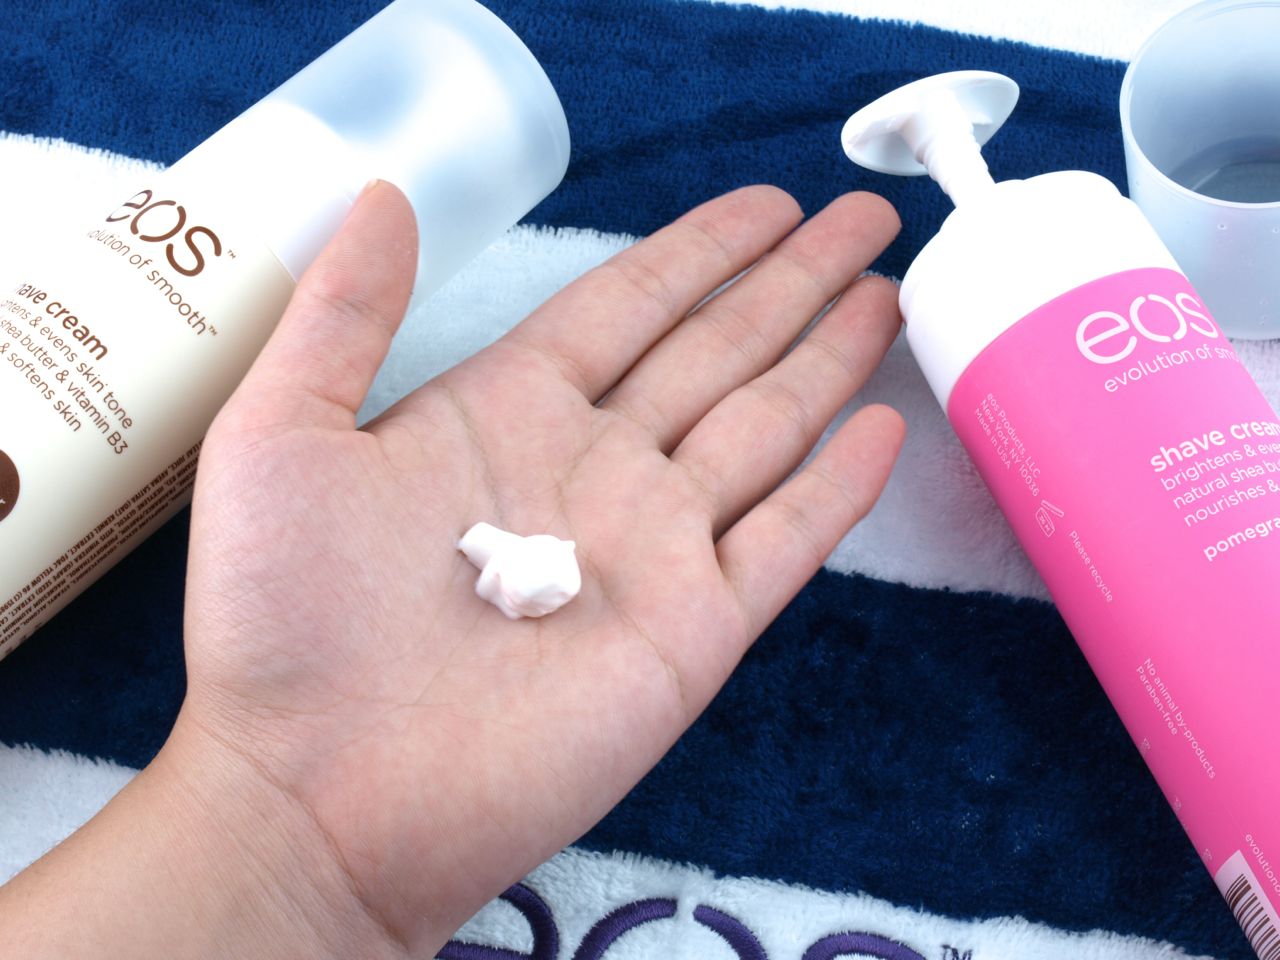 eos Shave Cream: Review